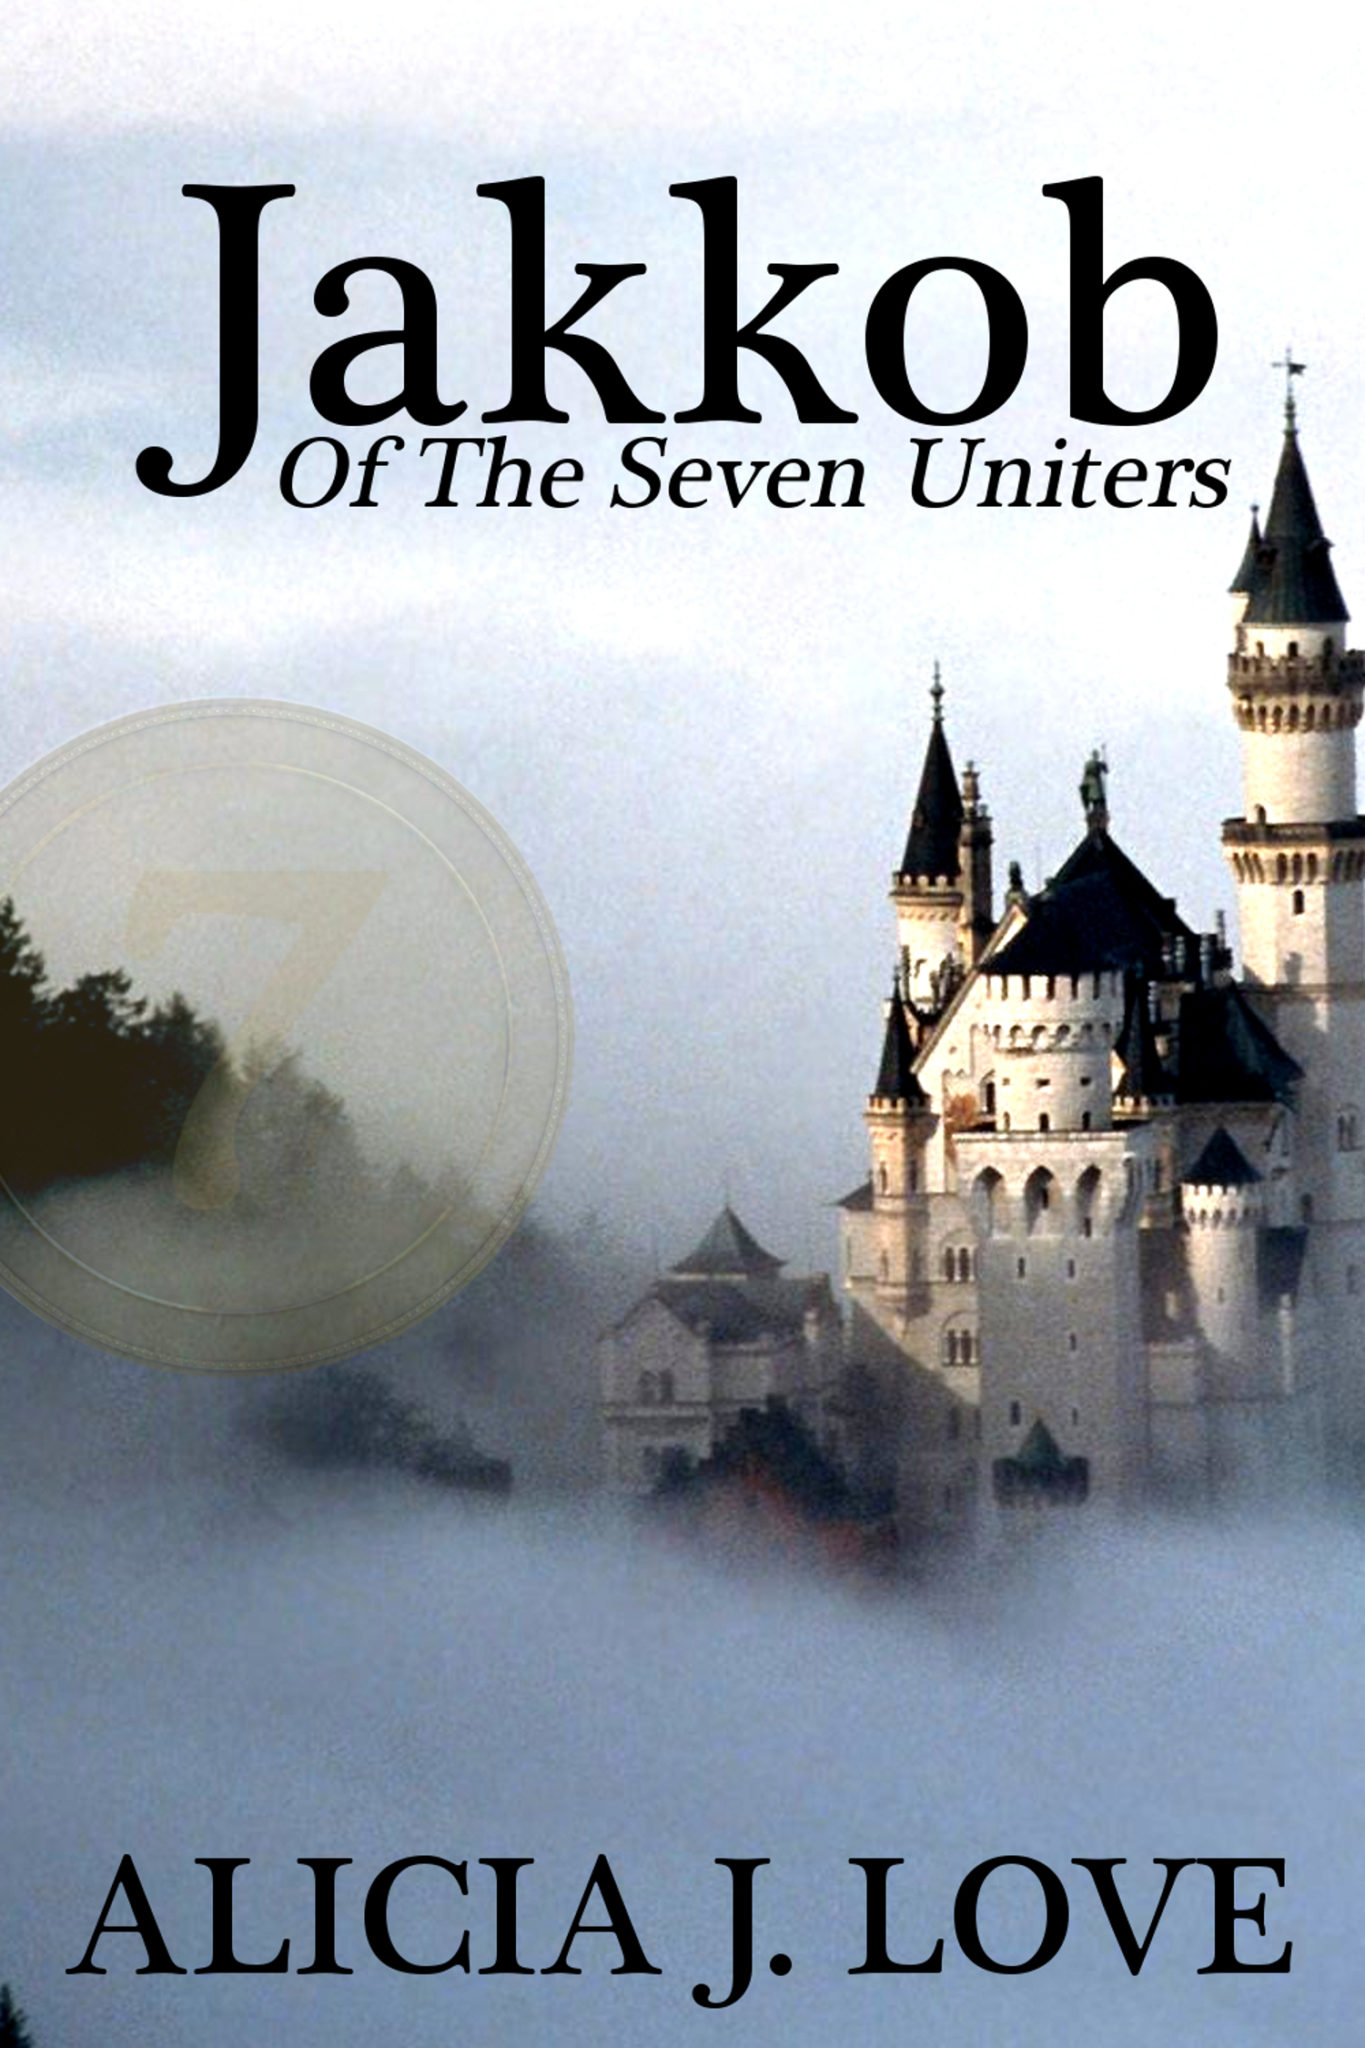 Jakkob of the Seven Uniters by Alicia J. Love